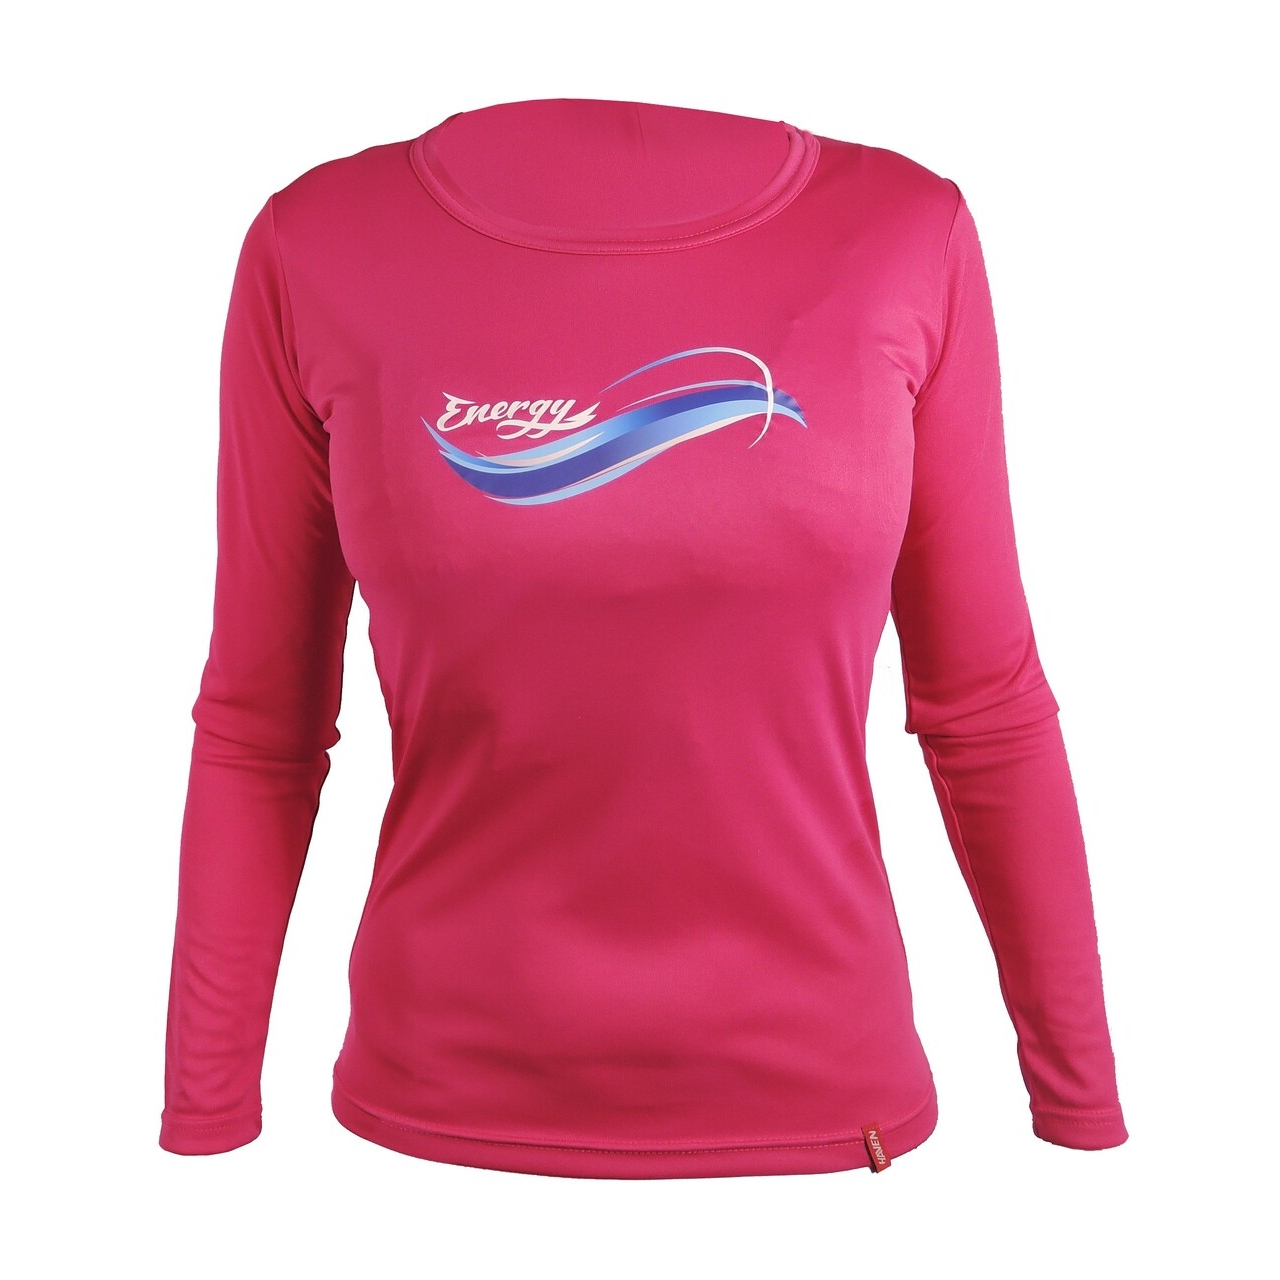 Tričko dámské s dlouhým rukávem Haven Energy - růžové, XL